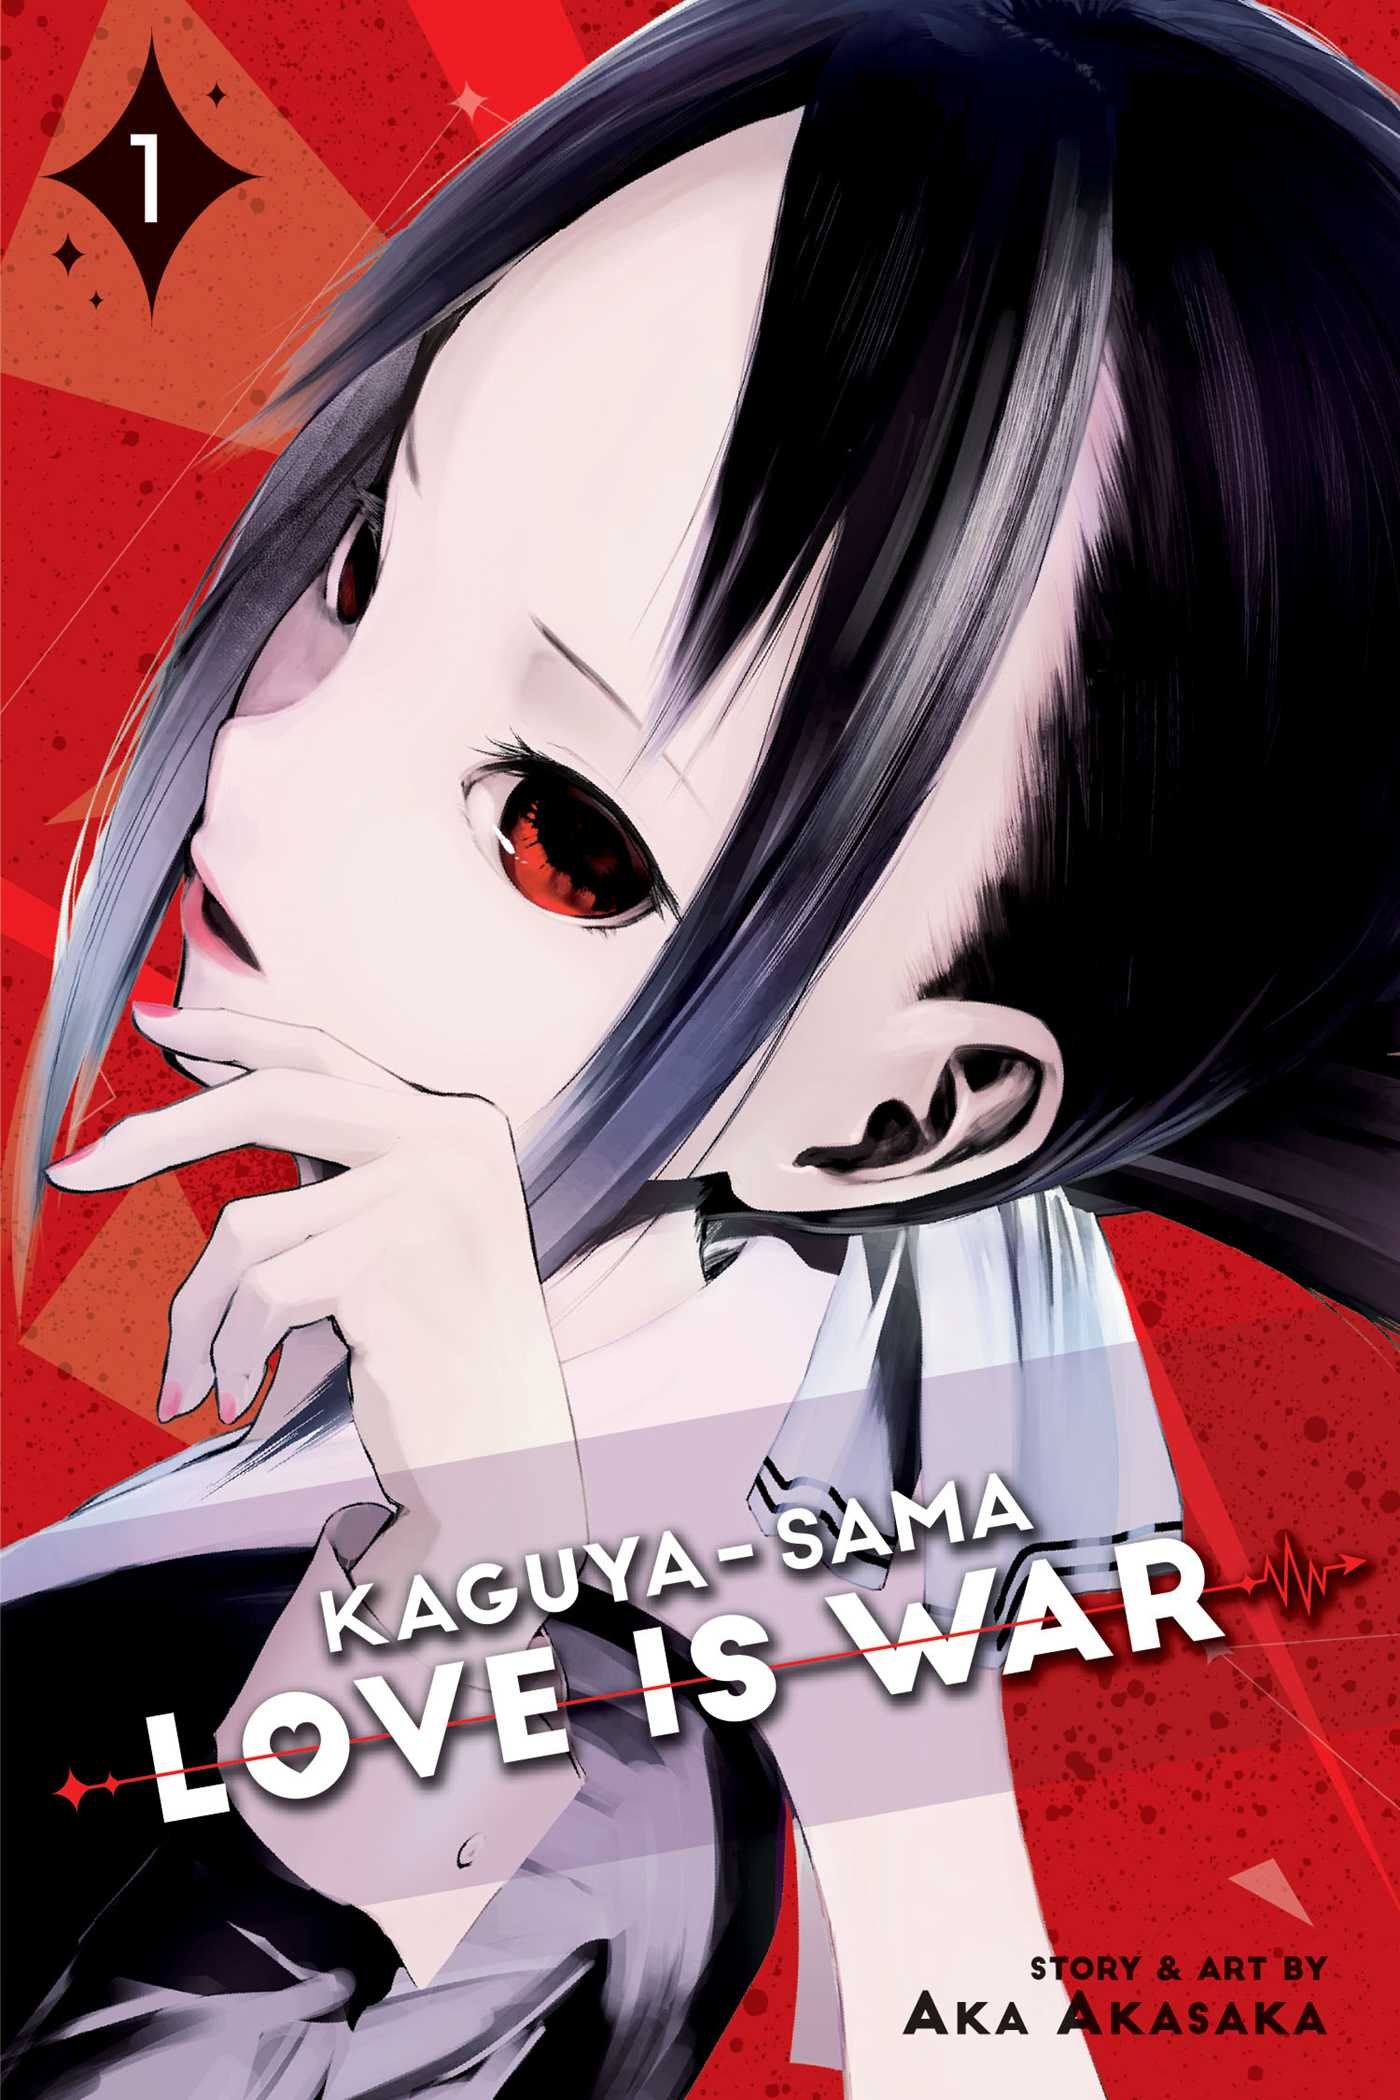 “Kaguya-Sama: Love is War” - Manga plays an unusual game of romance